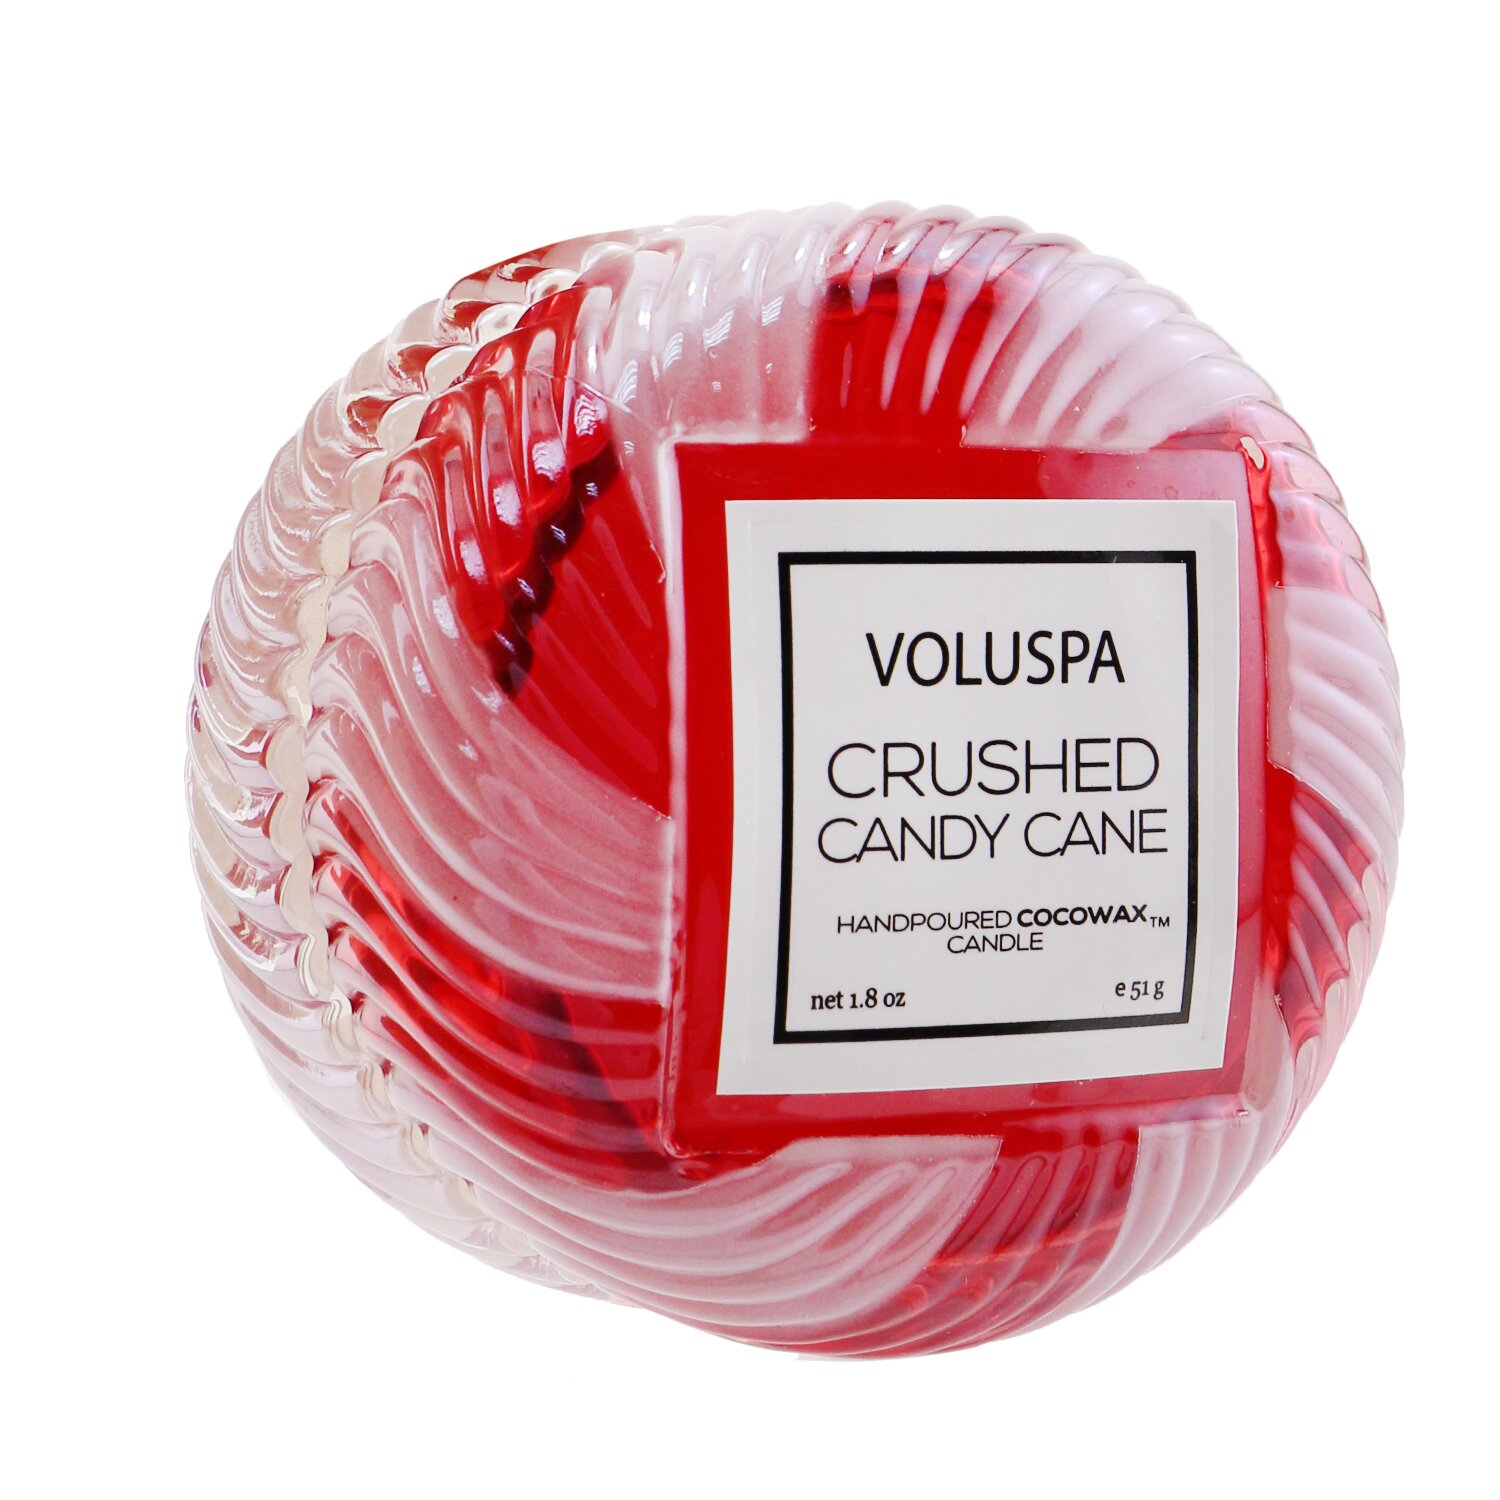 Voluspa Macaron Vela - Crushed Candy Cane 51g/1.8oz